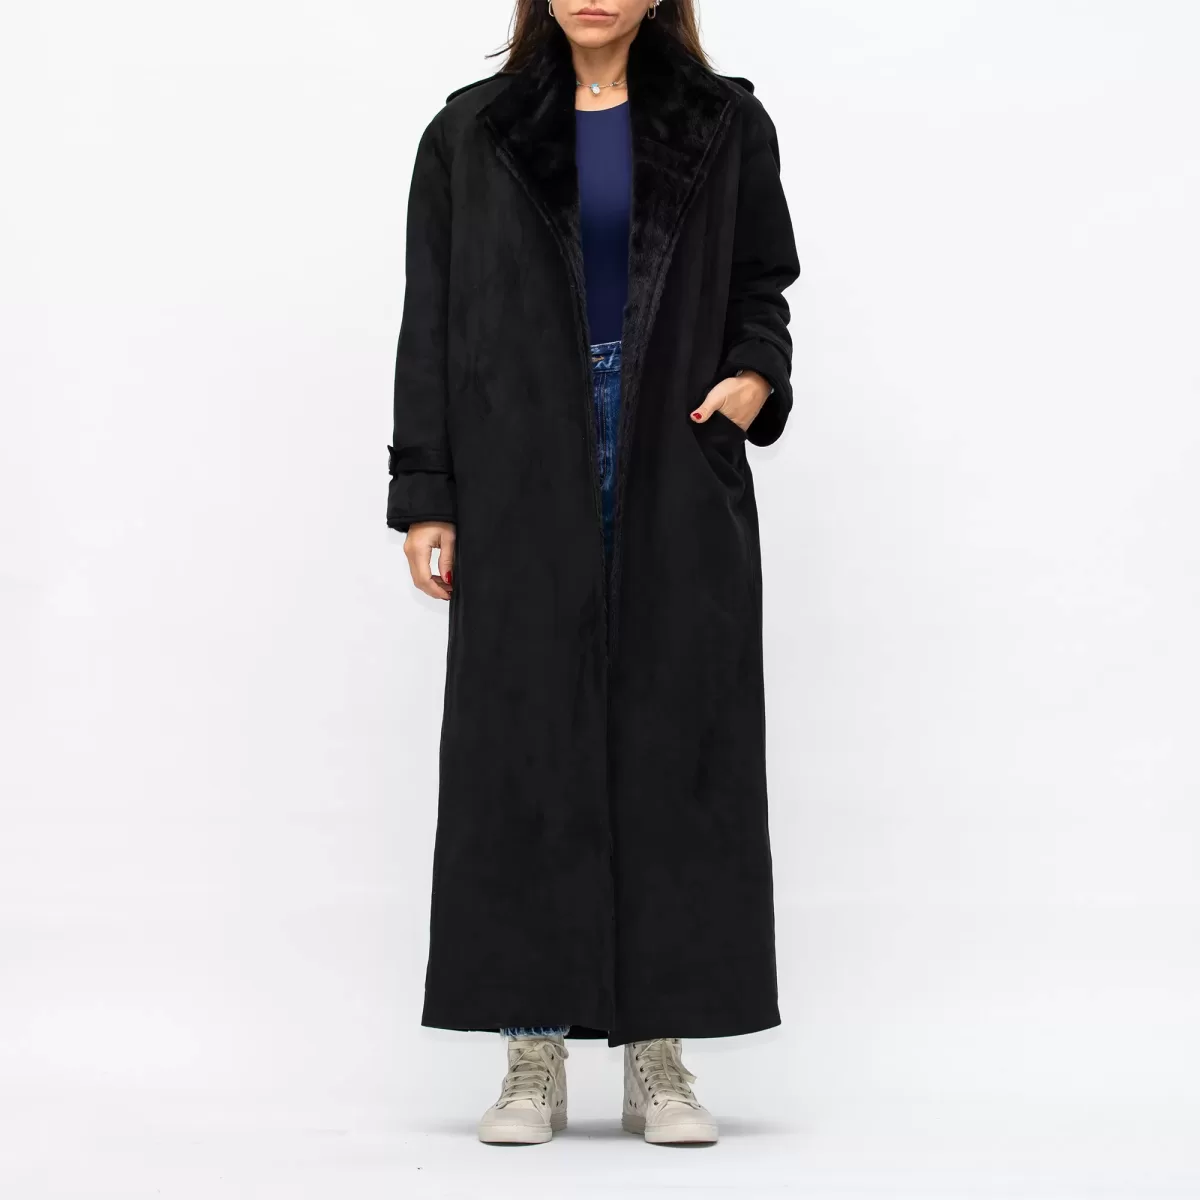 Black Fur Coat Suede with Fur lining Belted Jacket